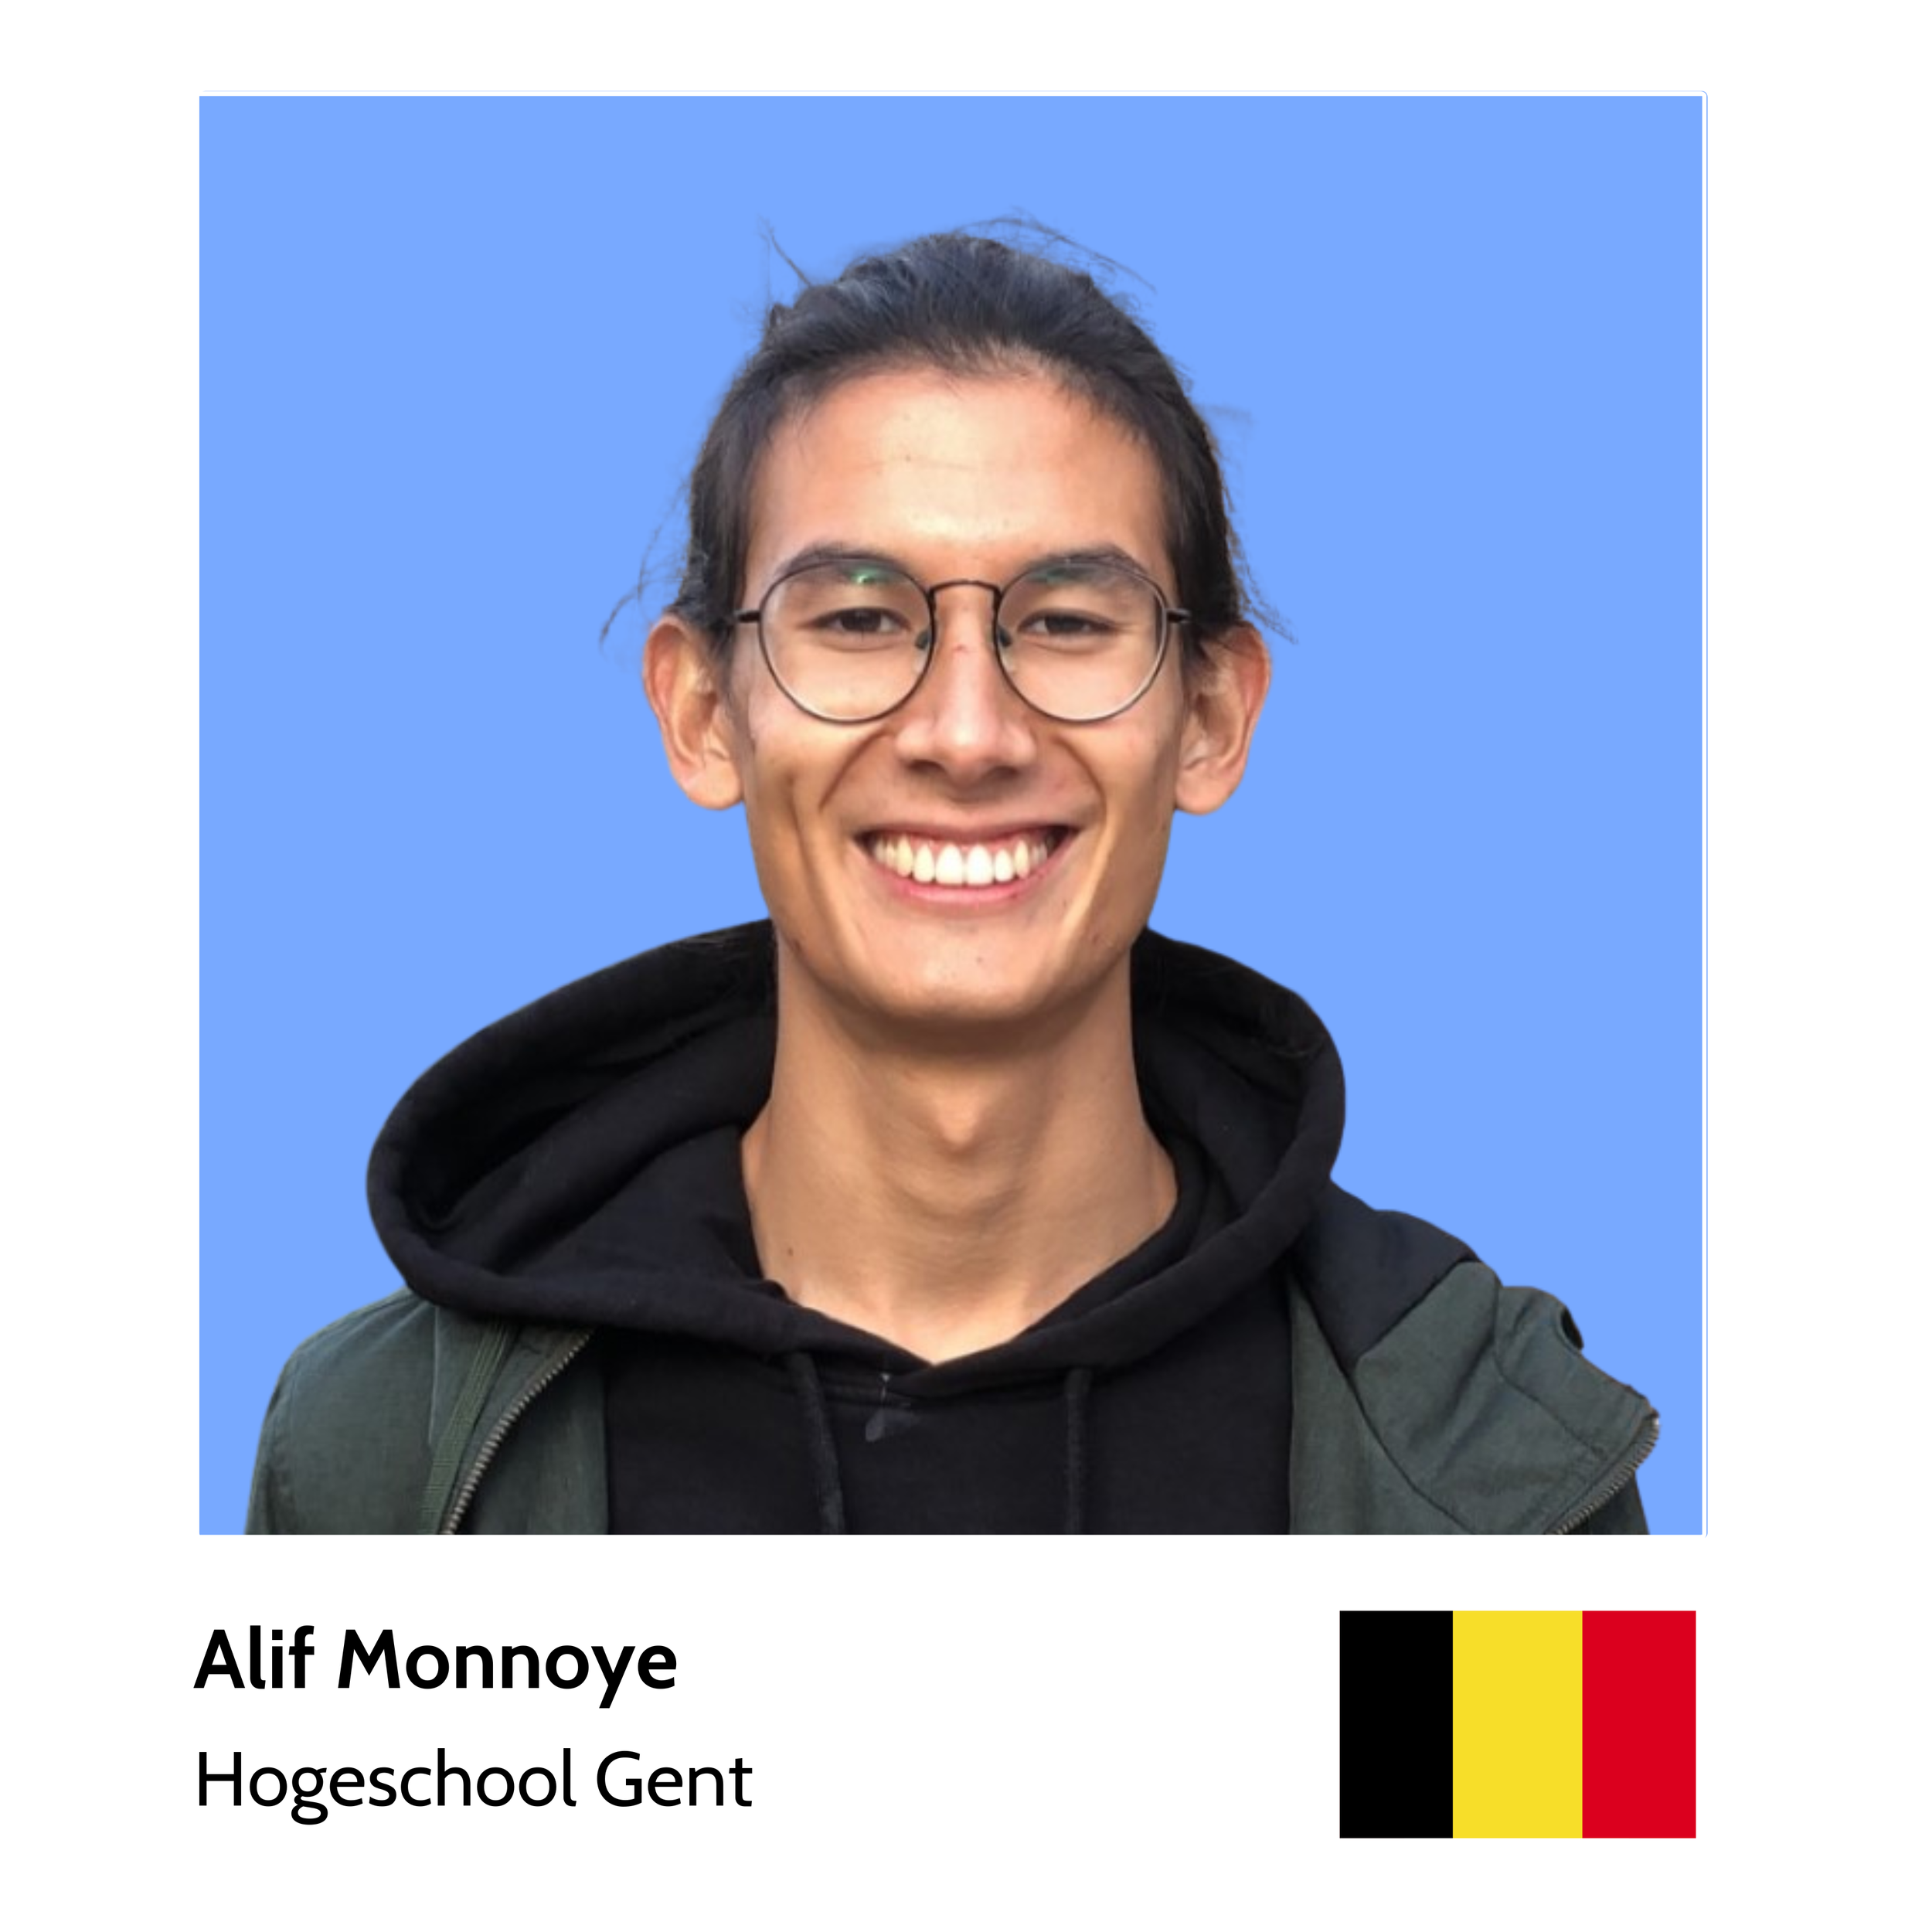 Your_Big_Year_ibm_z_student_ambassador_Alif_Monnoye_Hogeschool_Gent.png